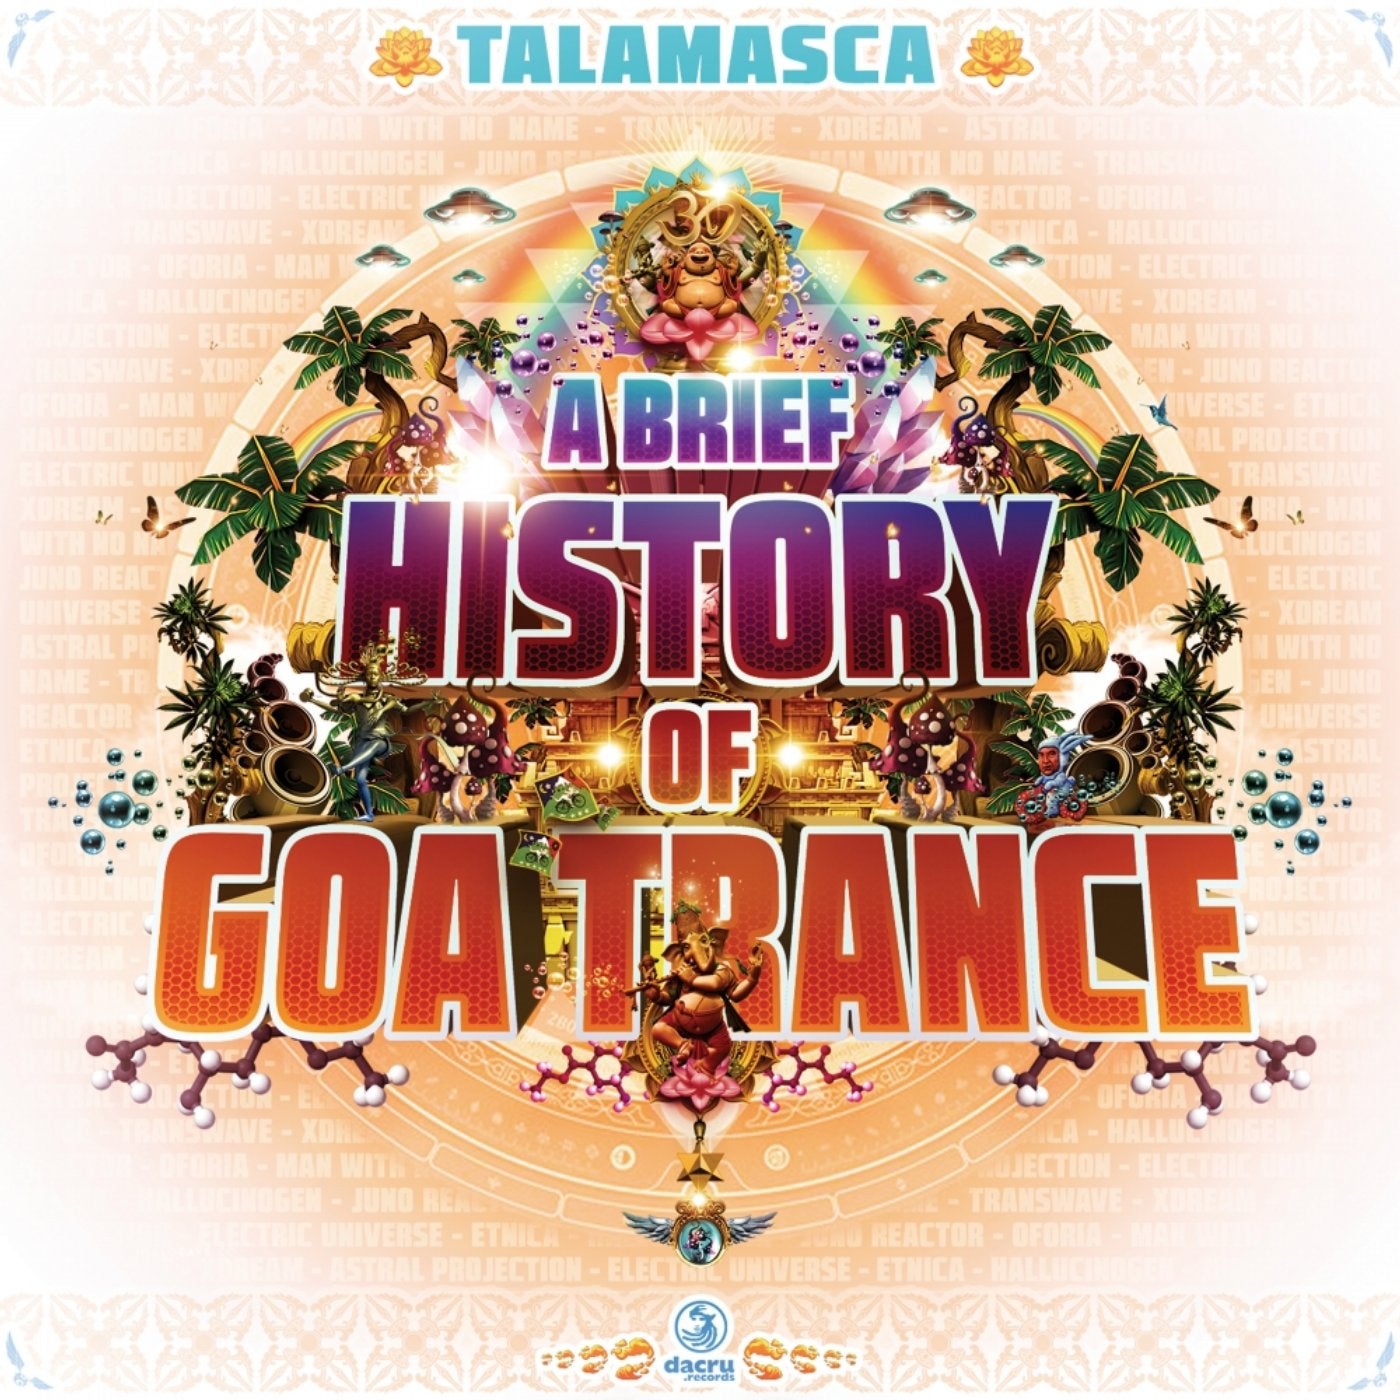 Talamasca, Deedrah, Stryker - A Brief History Of Goa-Trance [Dacru Records]  | Music & Downloads on Beatport